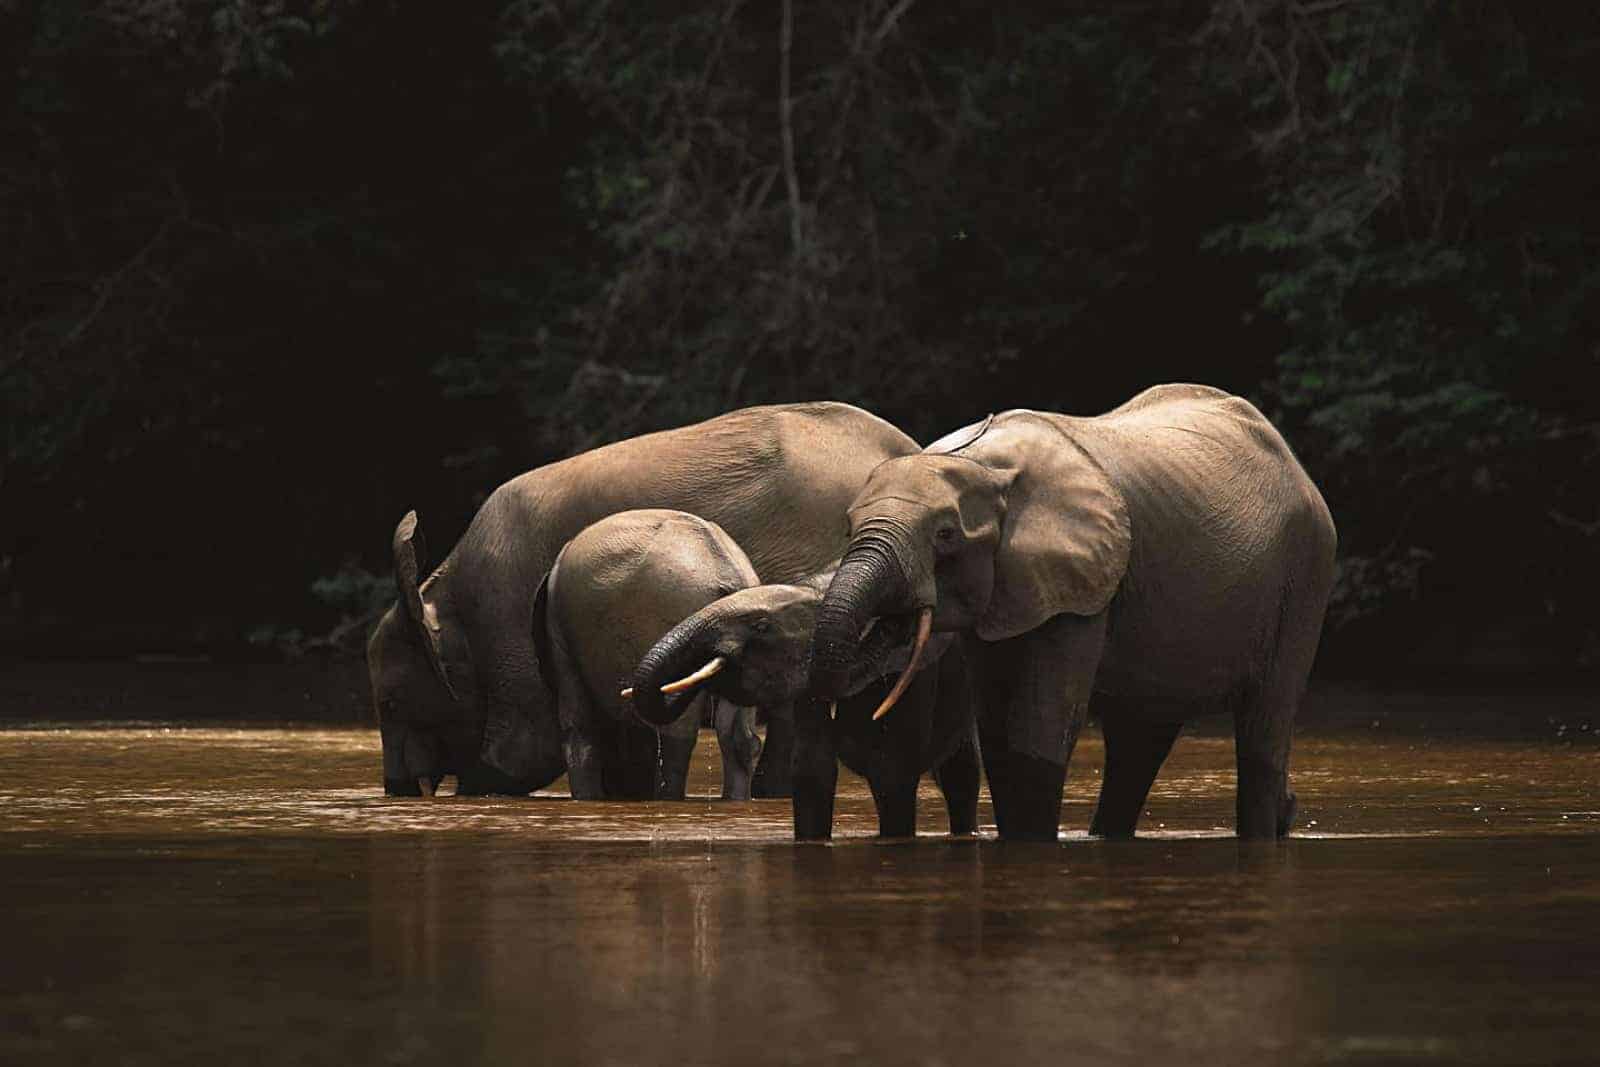 Impact of climate change on rainforest elephants